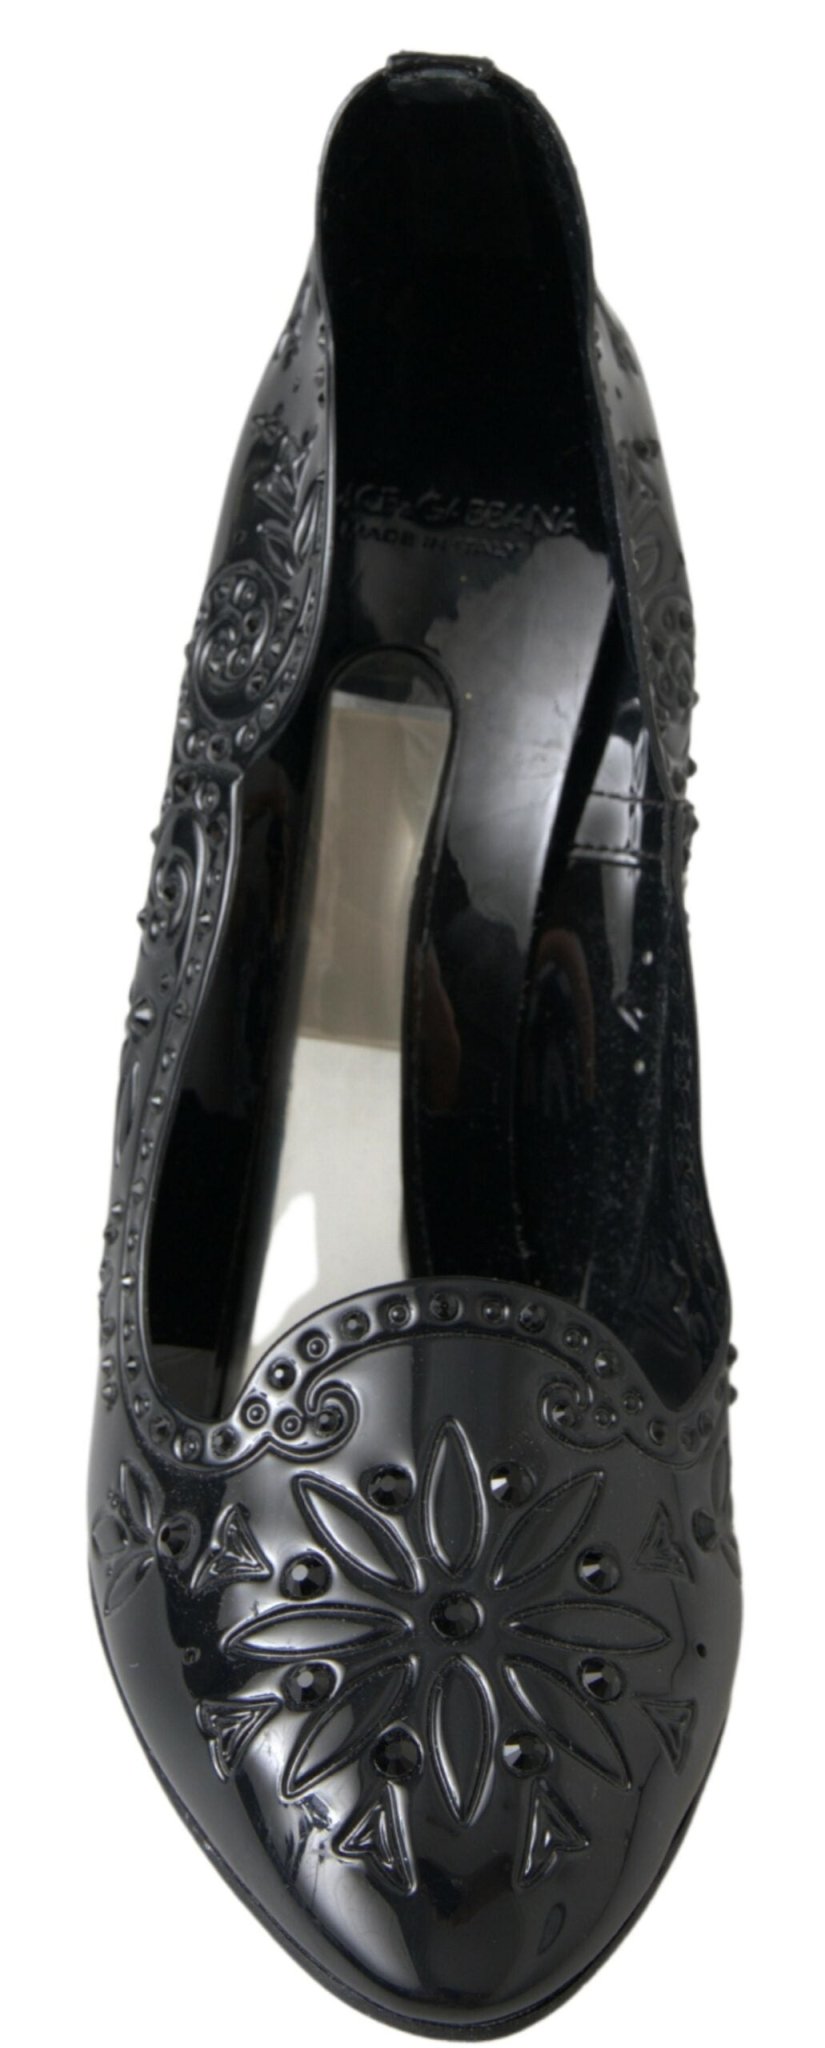 Dolce & Gabbana Elegant Black Crystal Cinderella Pumps